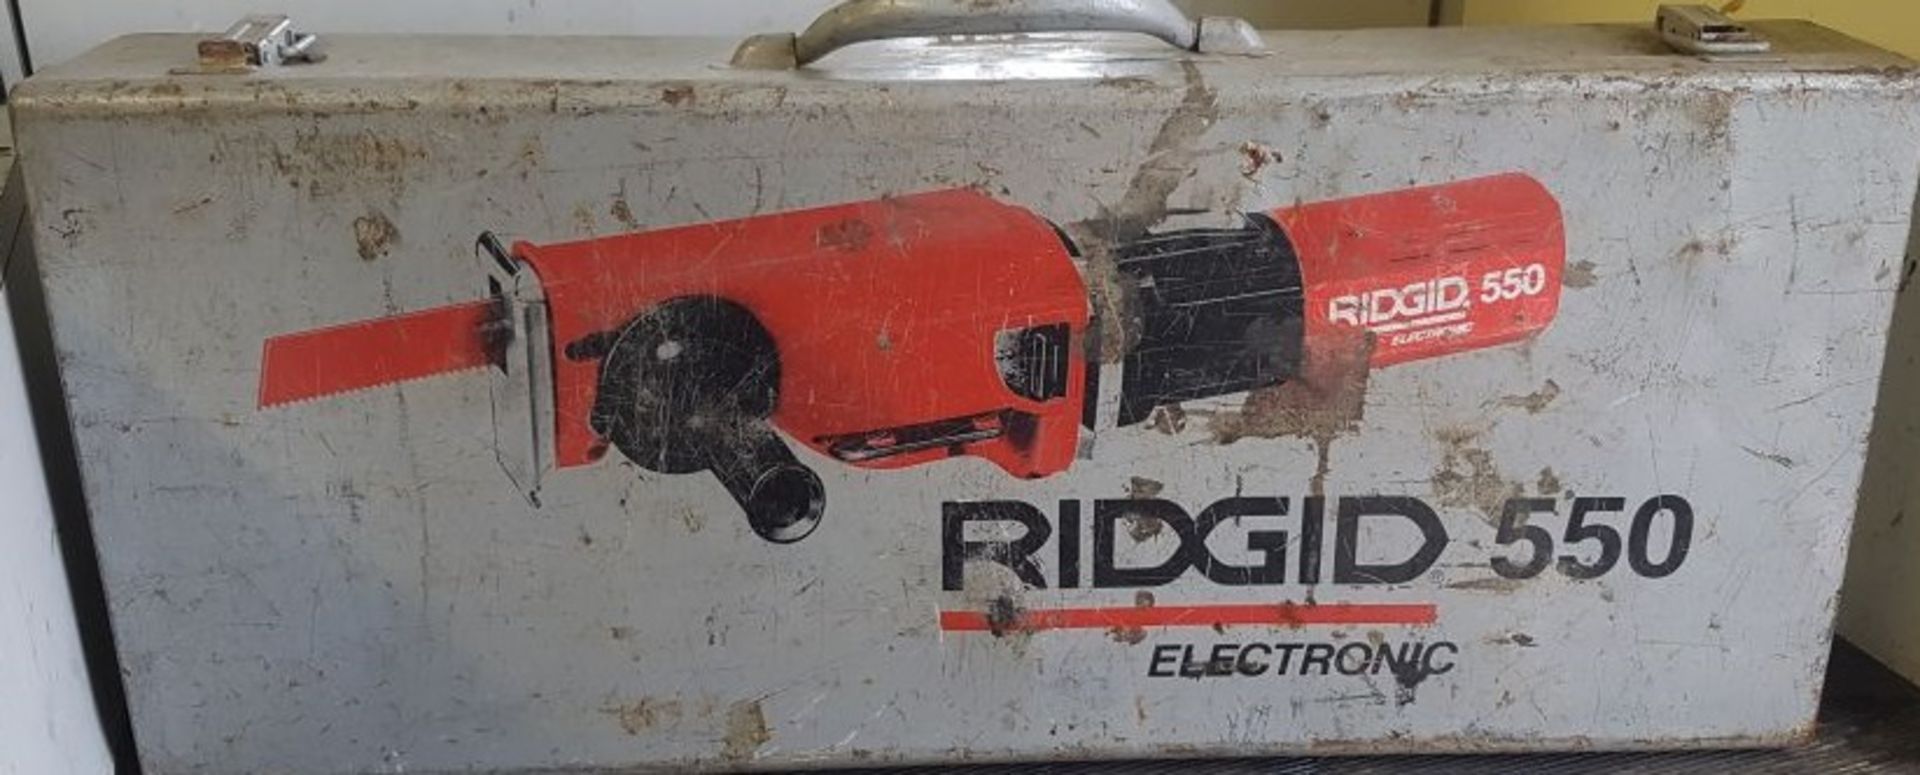 Ridgid 550 Reciprocating Saw - Image 6 of 6